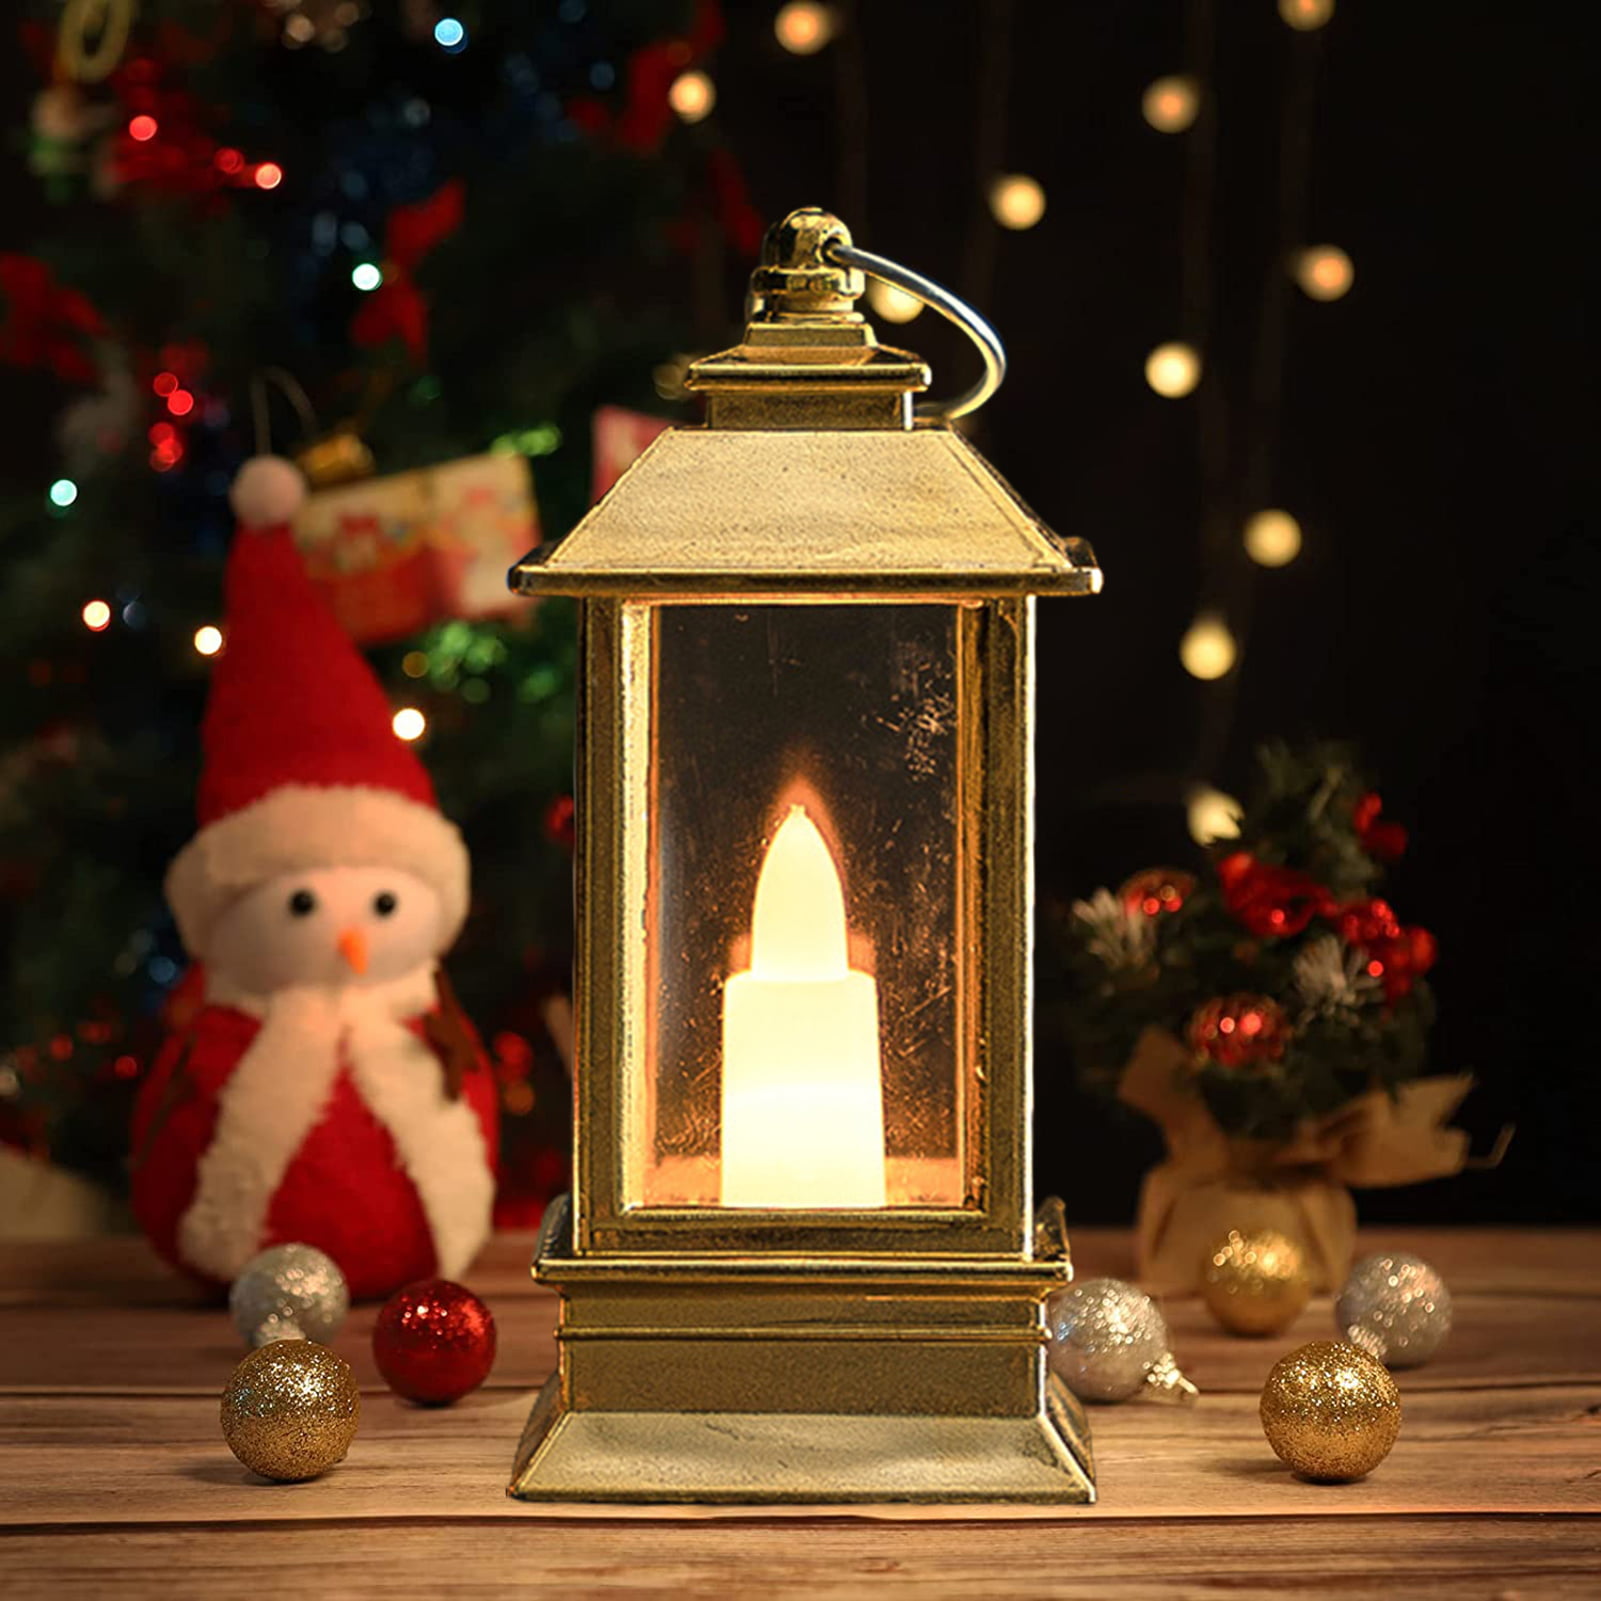 5 Vintage Style Decorative Fire Lantern, Flame Effect LED Lantern (Black)  Indoor Lanterns Decorative, Outdoor Hanging Lantern, Xmas Decorative